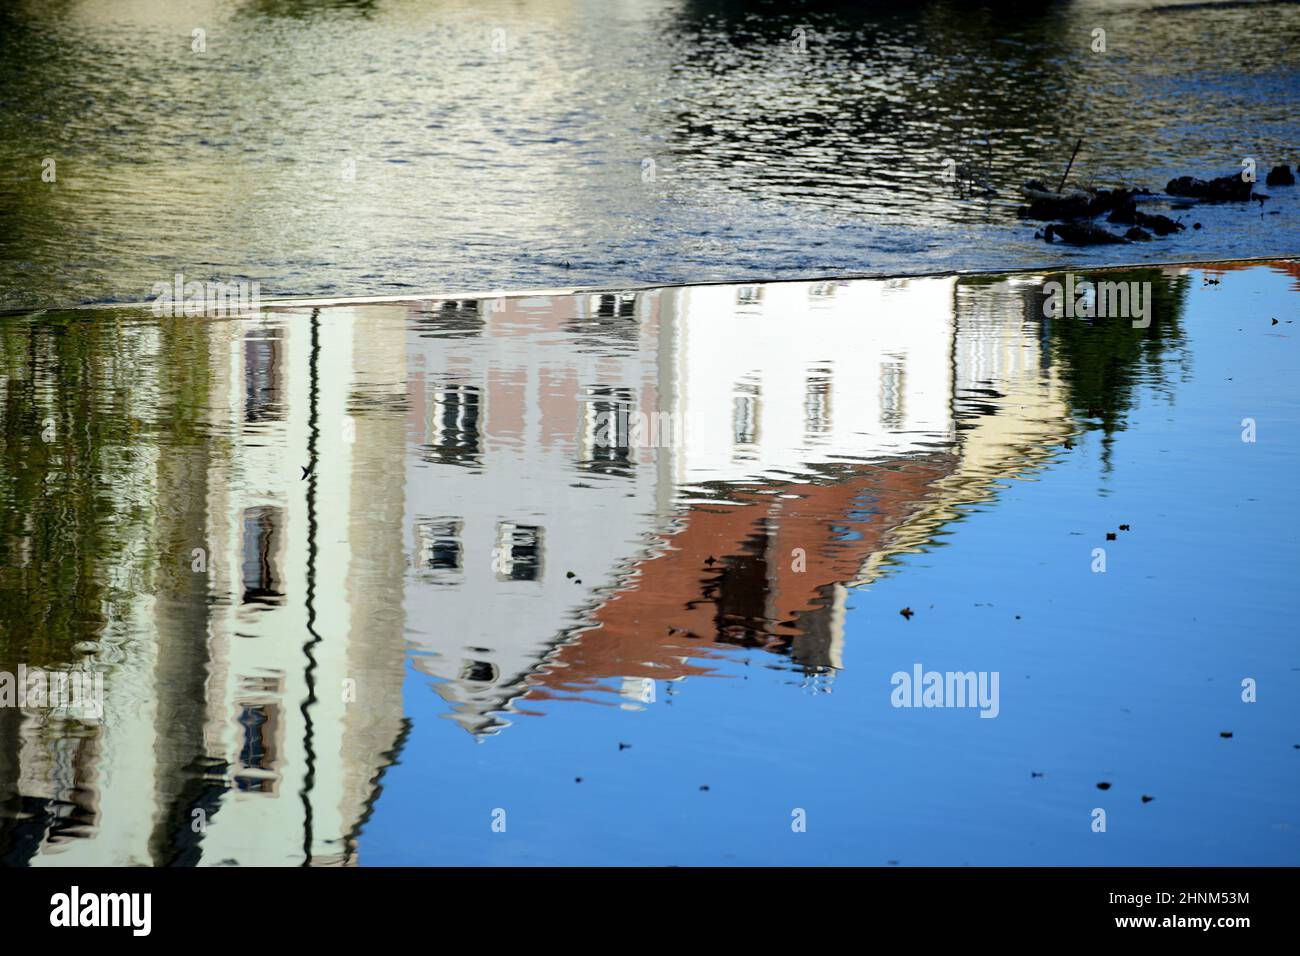 Häuser in Steyr spiegeln sich im Fluss Steyr, Österreich, Europa - les maisons de Steyr se reflètent dans la rivière Steyr, Autriche, Europe Banque D'Images